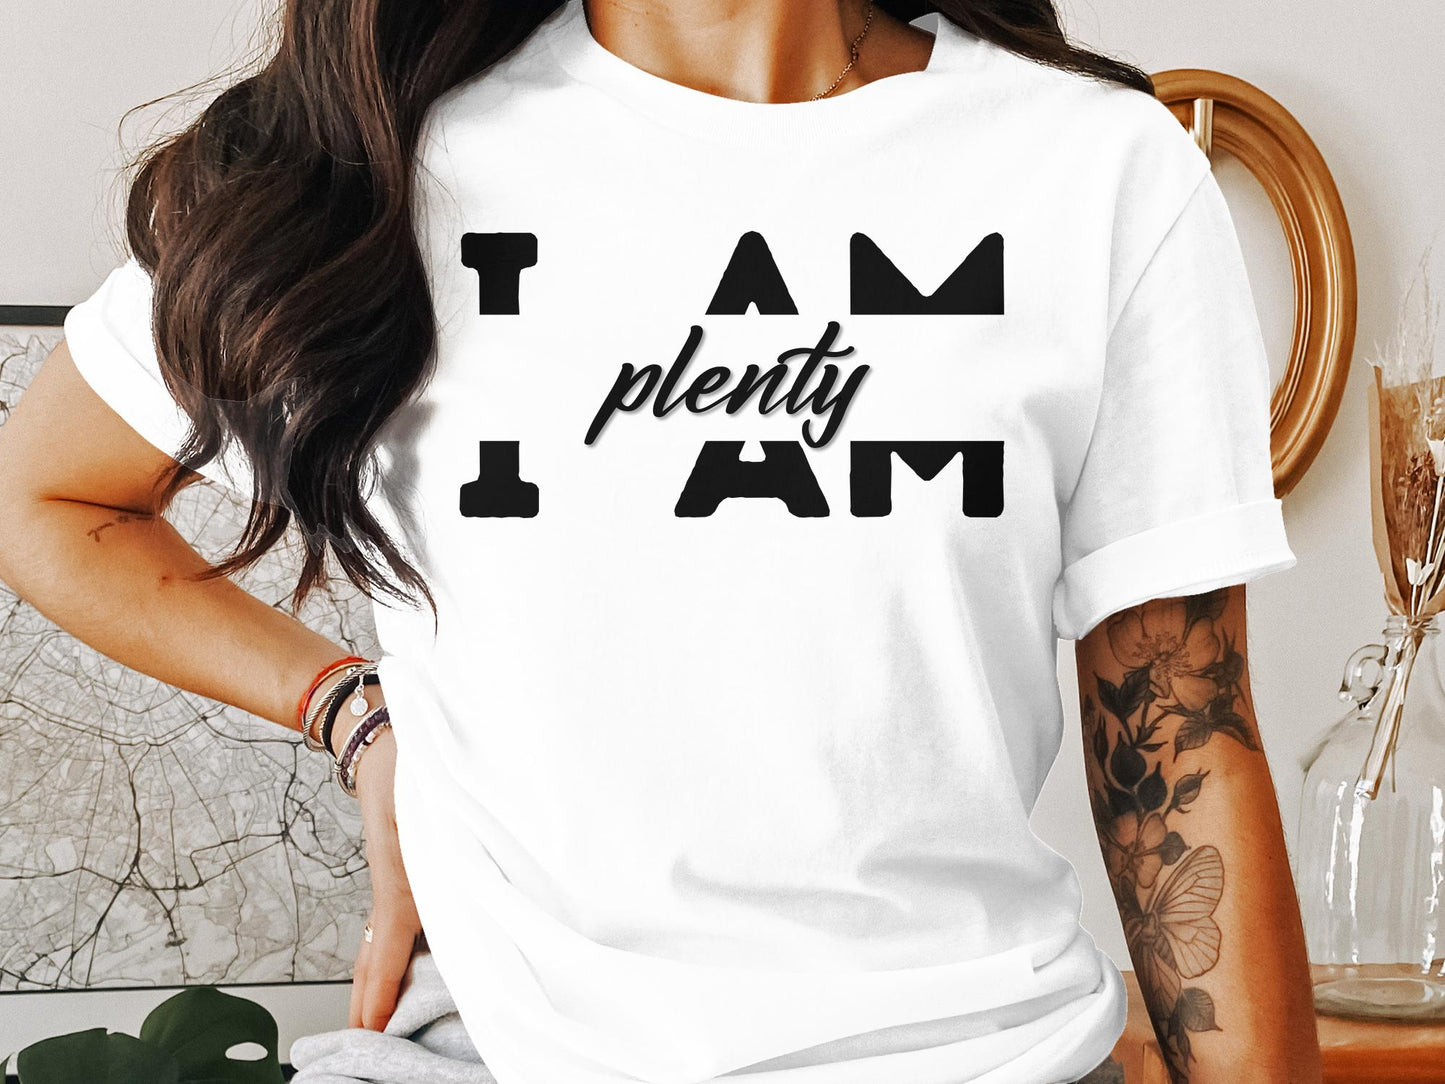 I Am Plenty - Affirmation Quote Shirt - Encouraging and Motivating